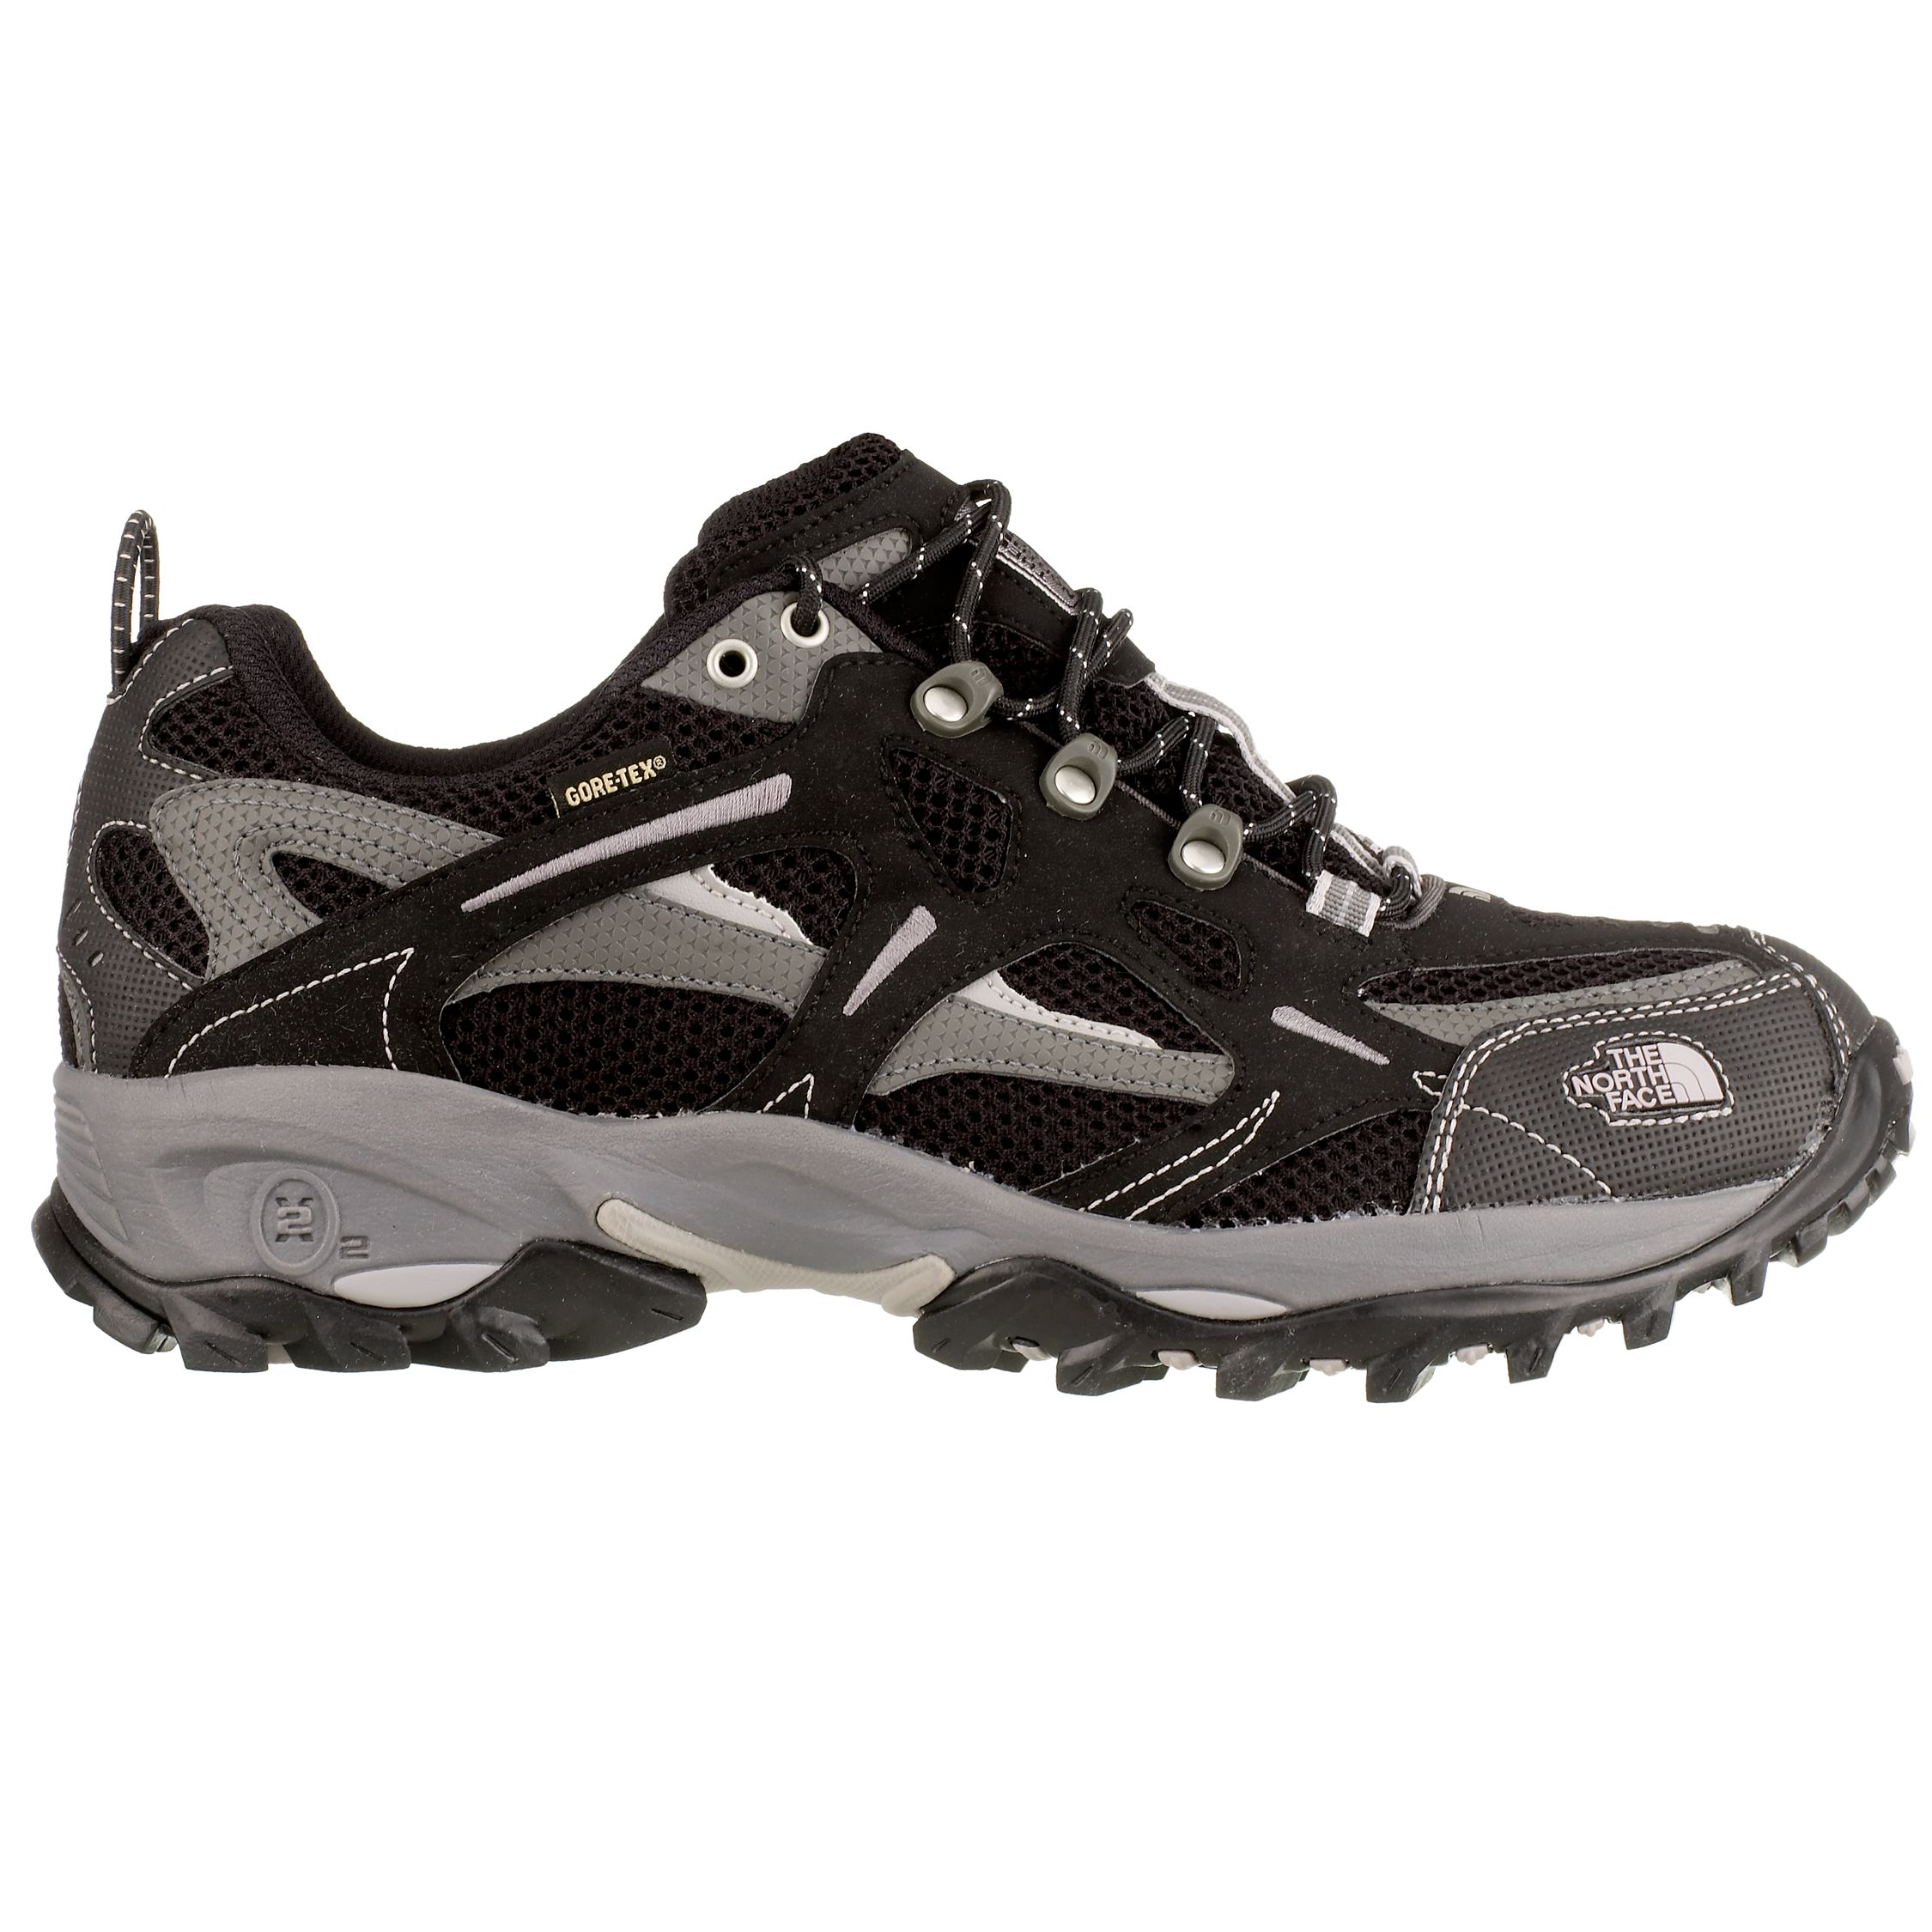 Hedgehog XCR Shoes, Black, Size 11